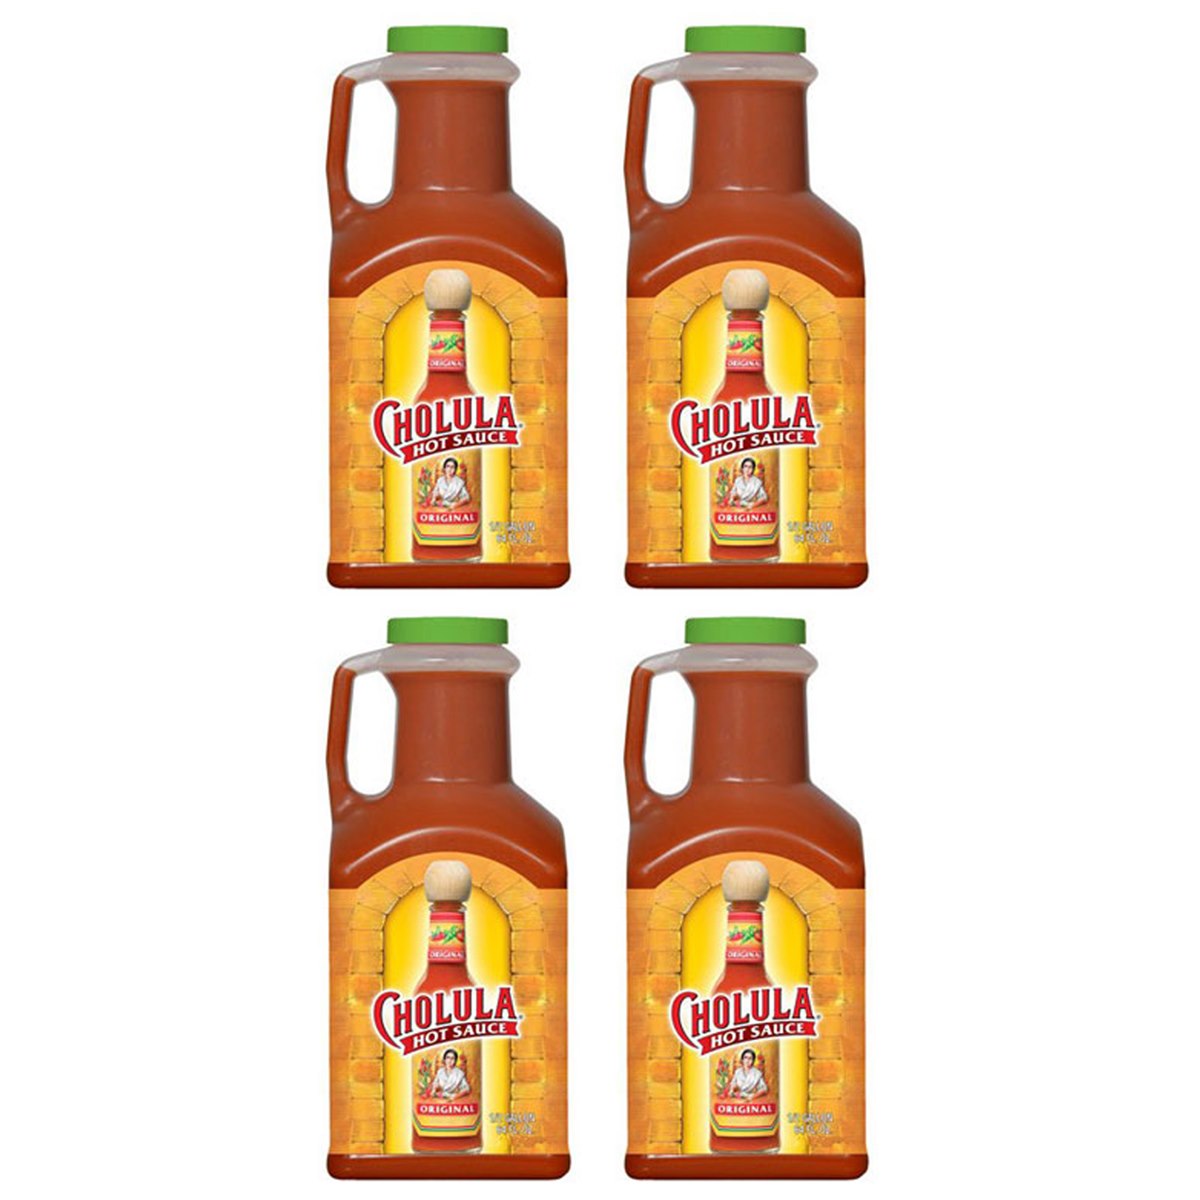 Case of 4 x Original Cholula Hot Sauce Catering Size 1.89 Litre